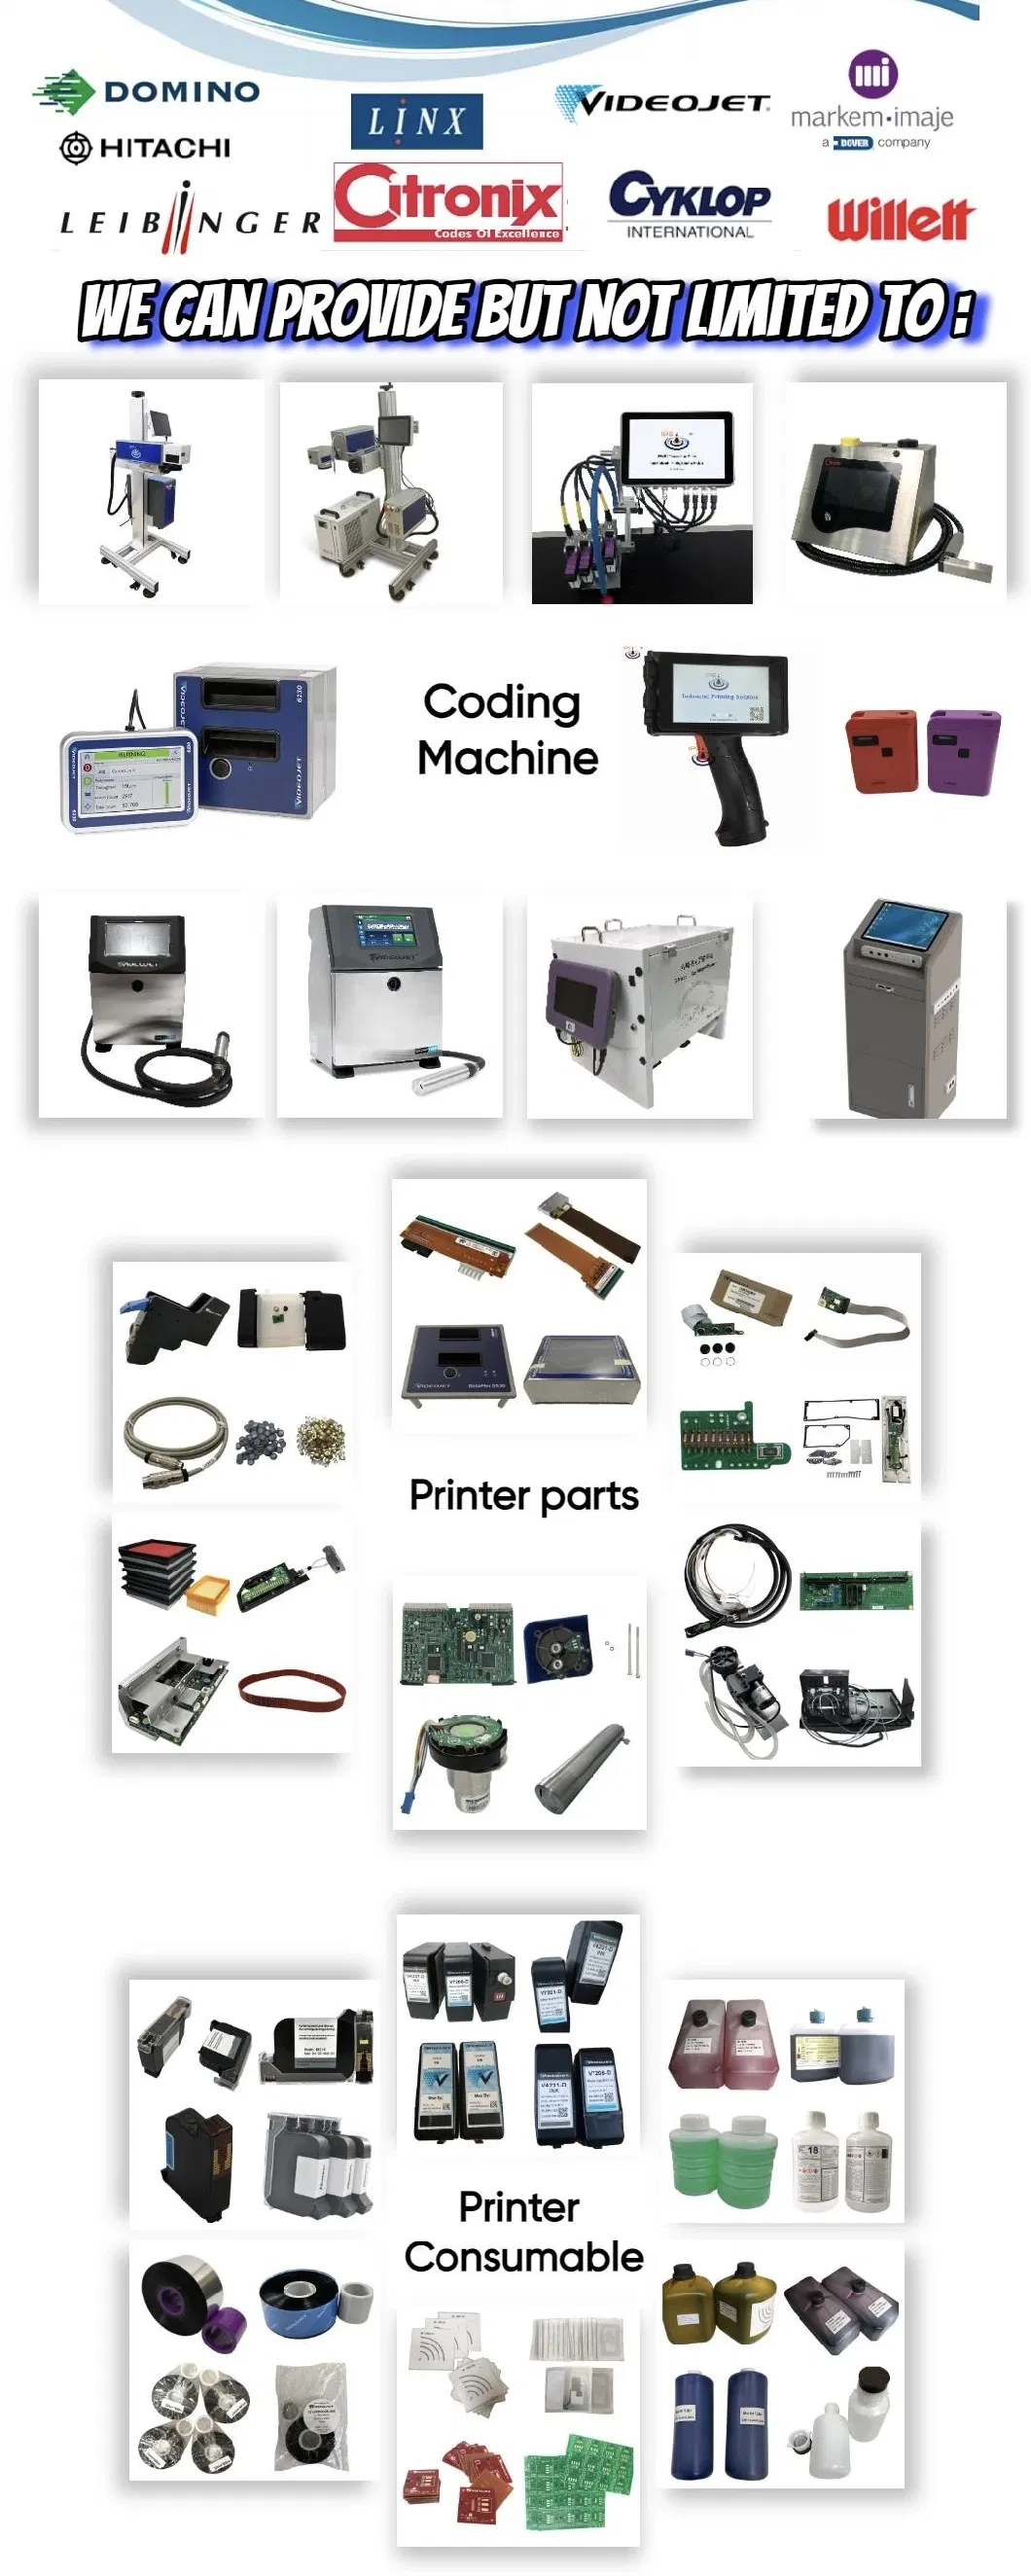 Original Videojet Thermal Transfer Over Printer 6530 6330 53mm/106mm Coding for Labels, Flexible Packaging